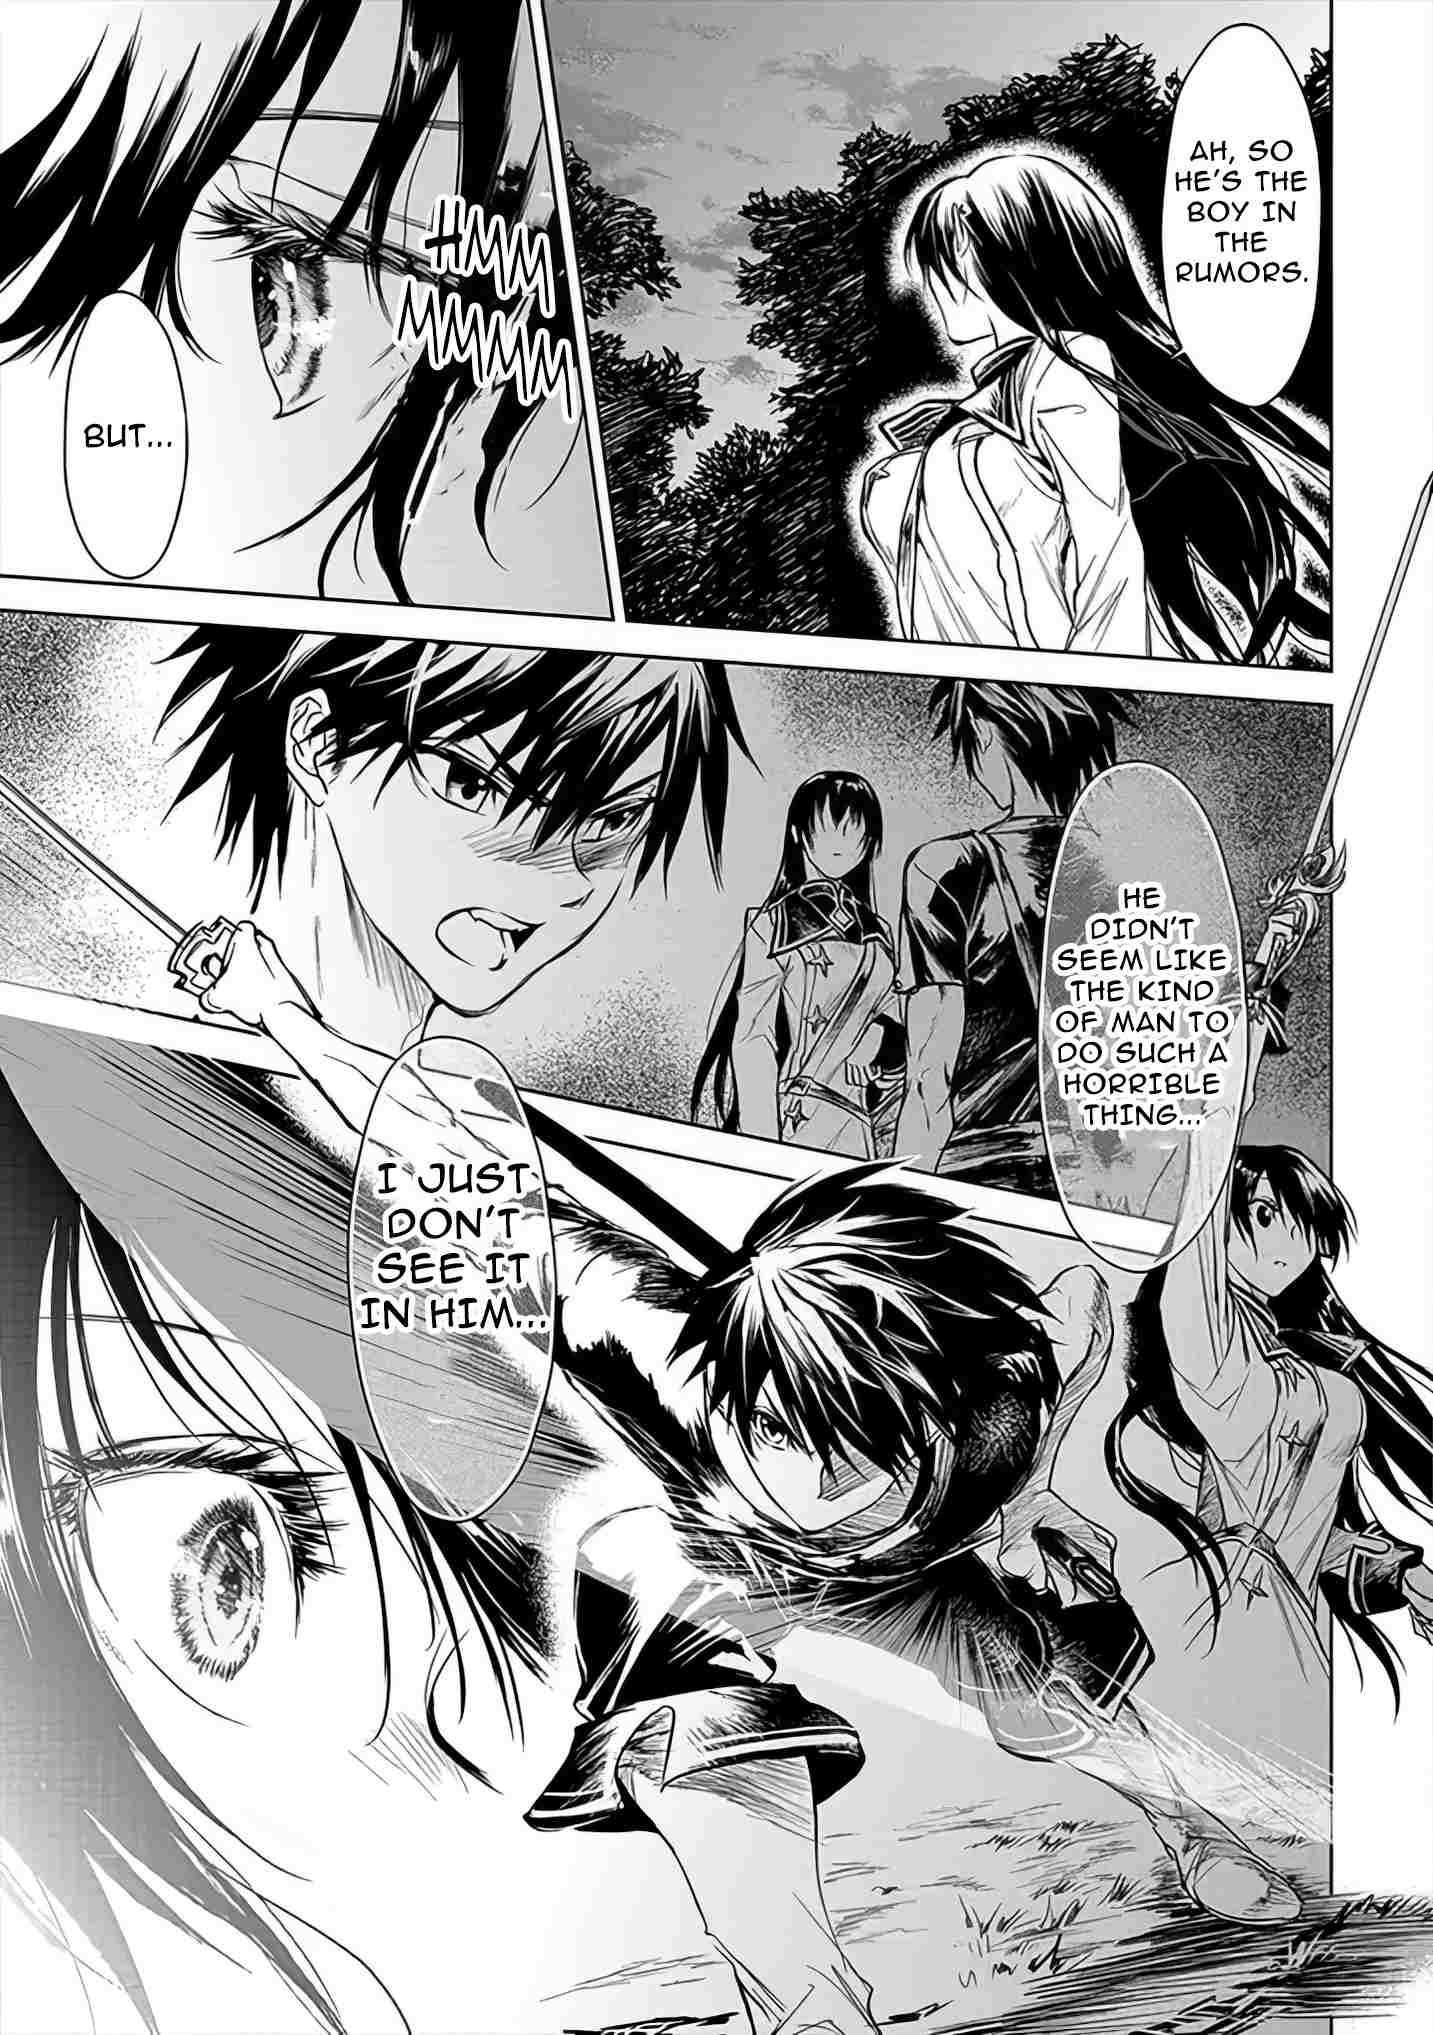 Padaria Scans on X: Saindo do forno!! Ori of the Dragon Chain Capítulo 8 Manga  Livre:  Tsuki Mangas:    / X